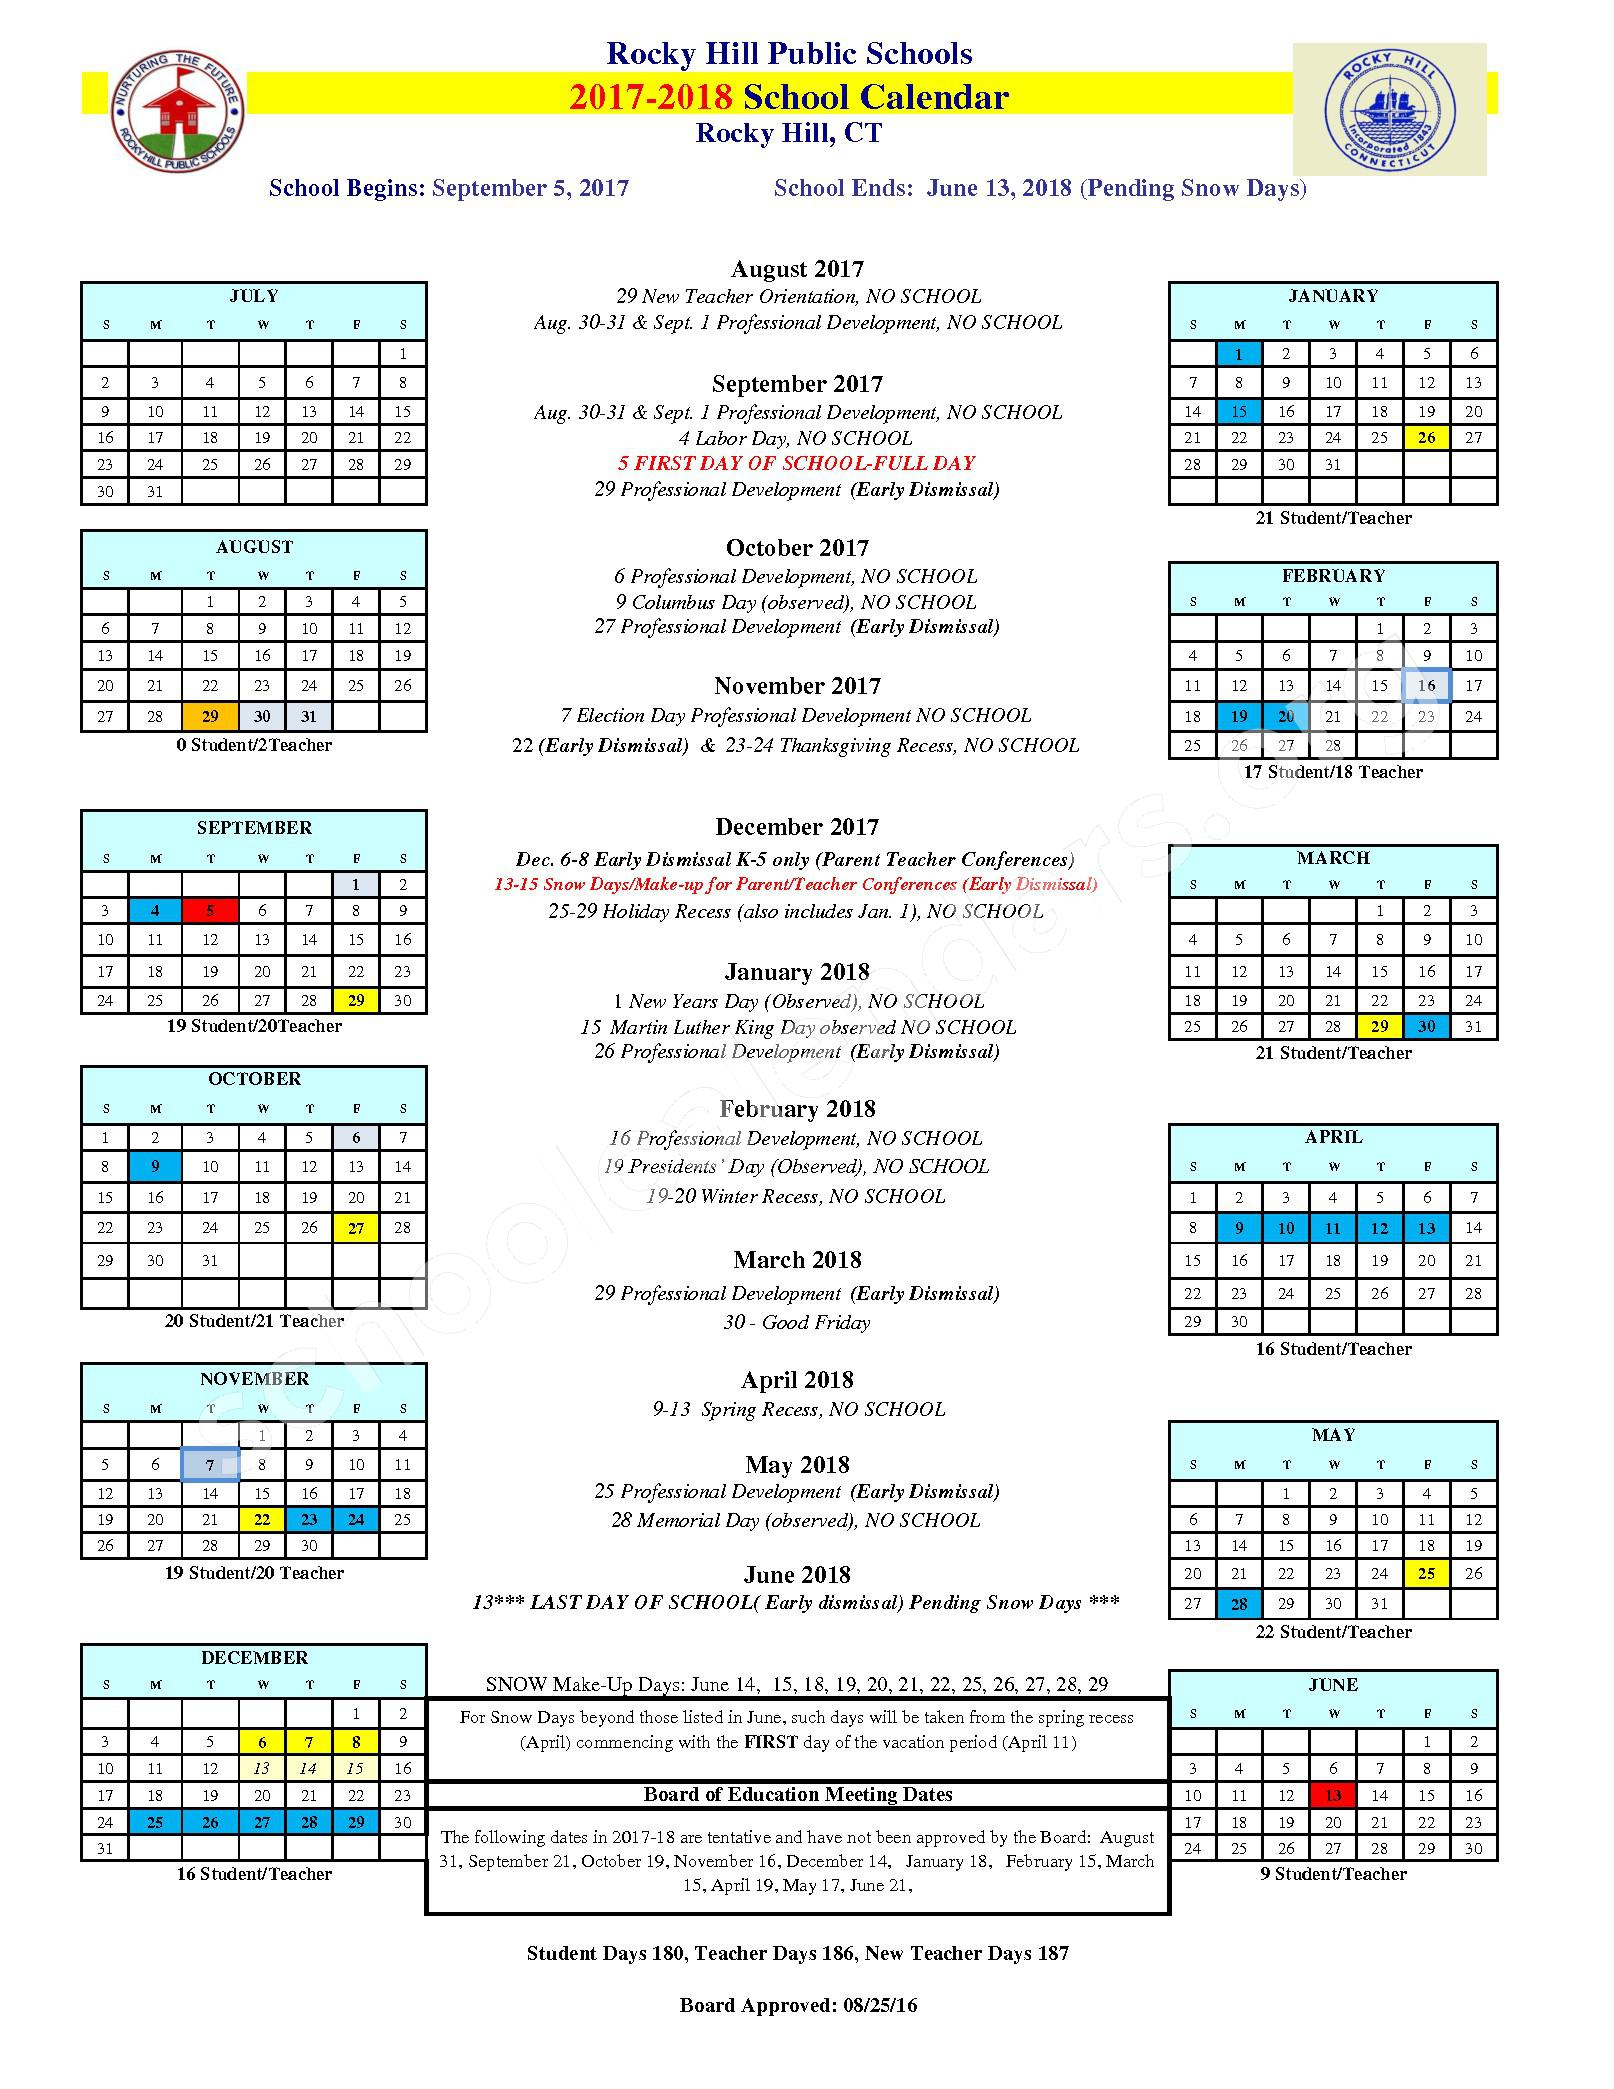 Rocky Hill Public Schools Calendar 2023 - Schoolcalendars.net